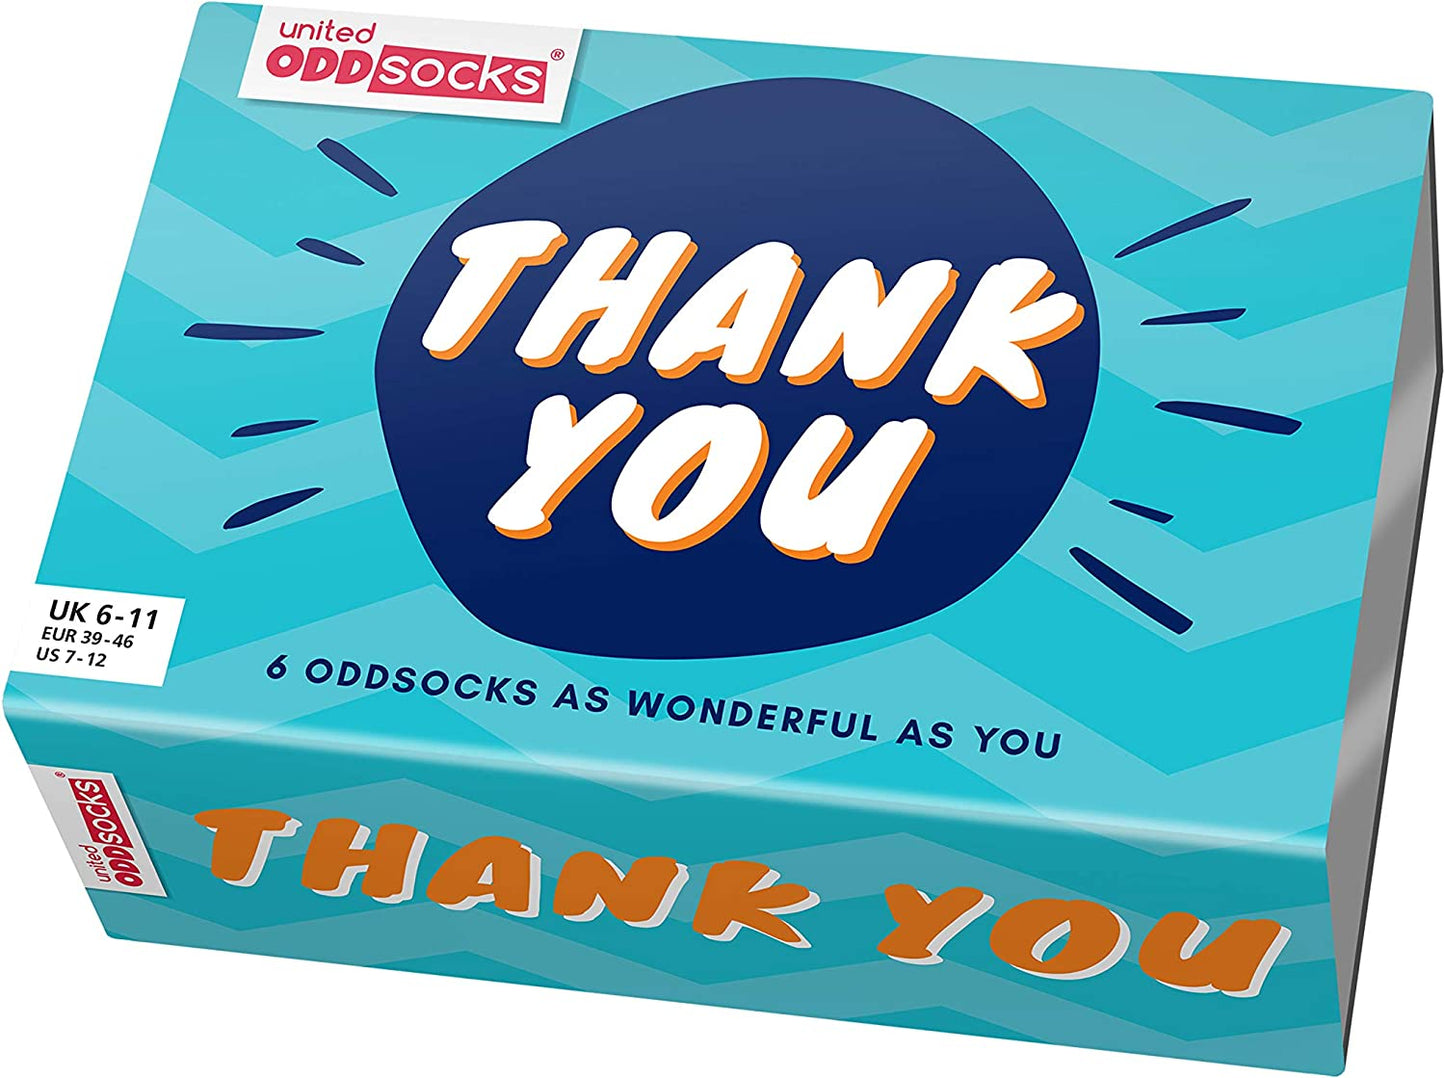 Chaussettes dépareillées - United Oddsocks Box Thank You United Oddsocks